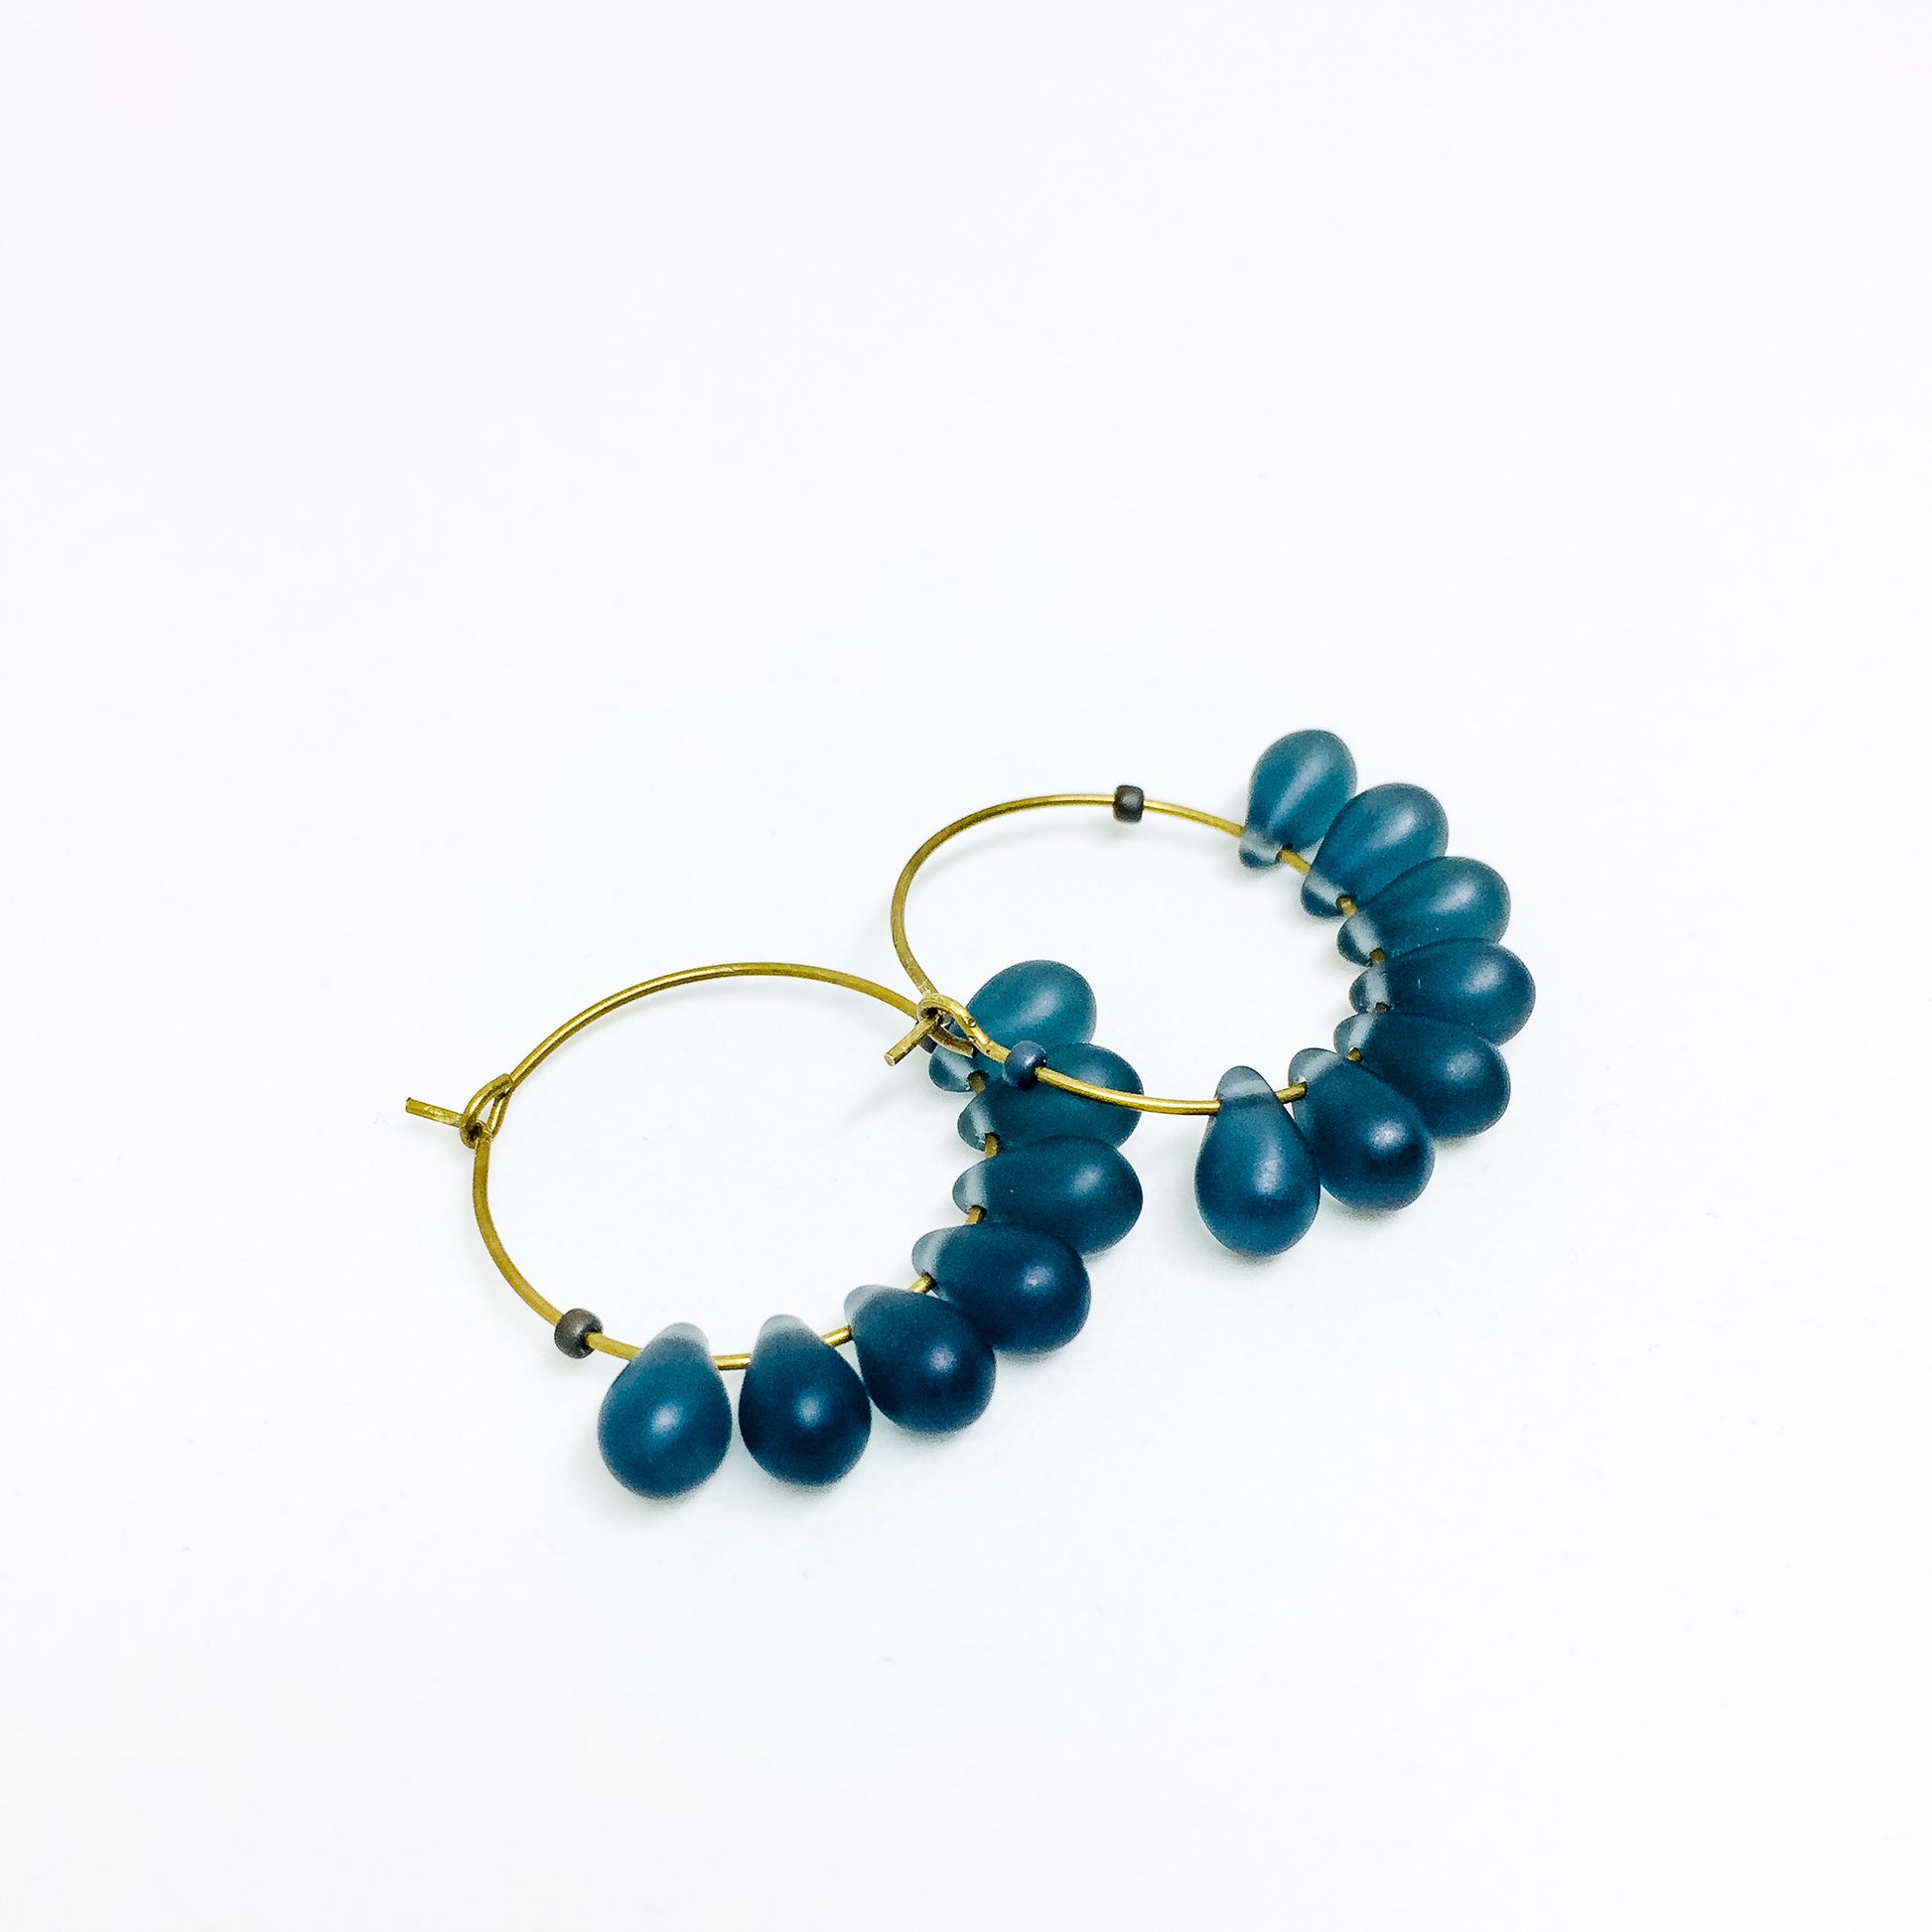 Dewdrop beaded glass hoop earrings in montana blue